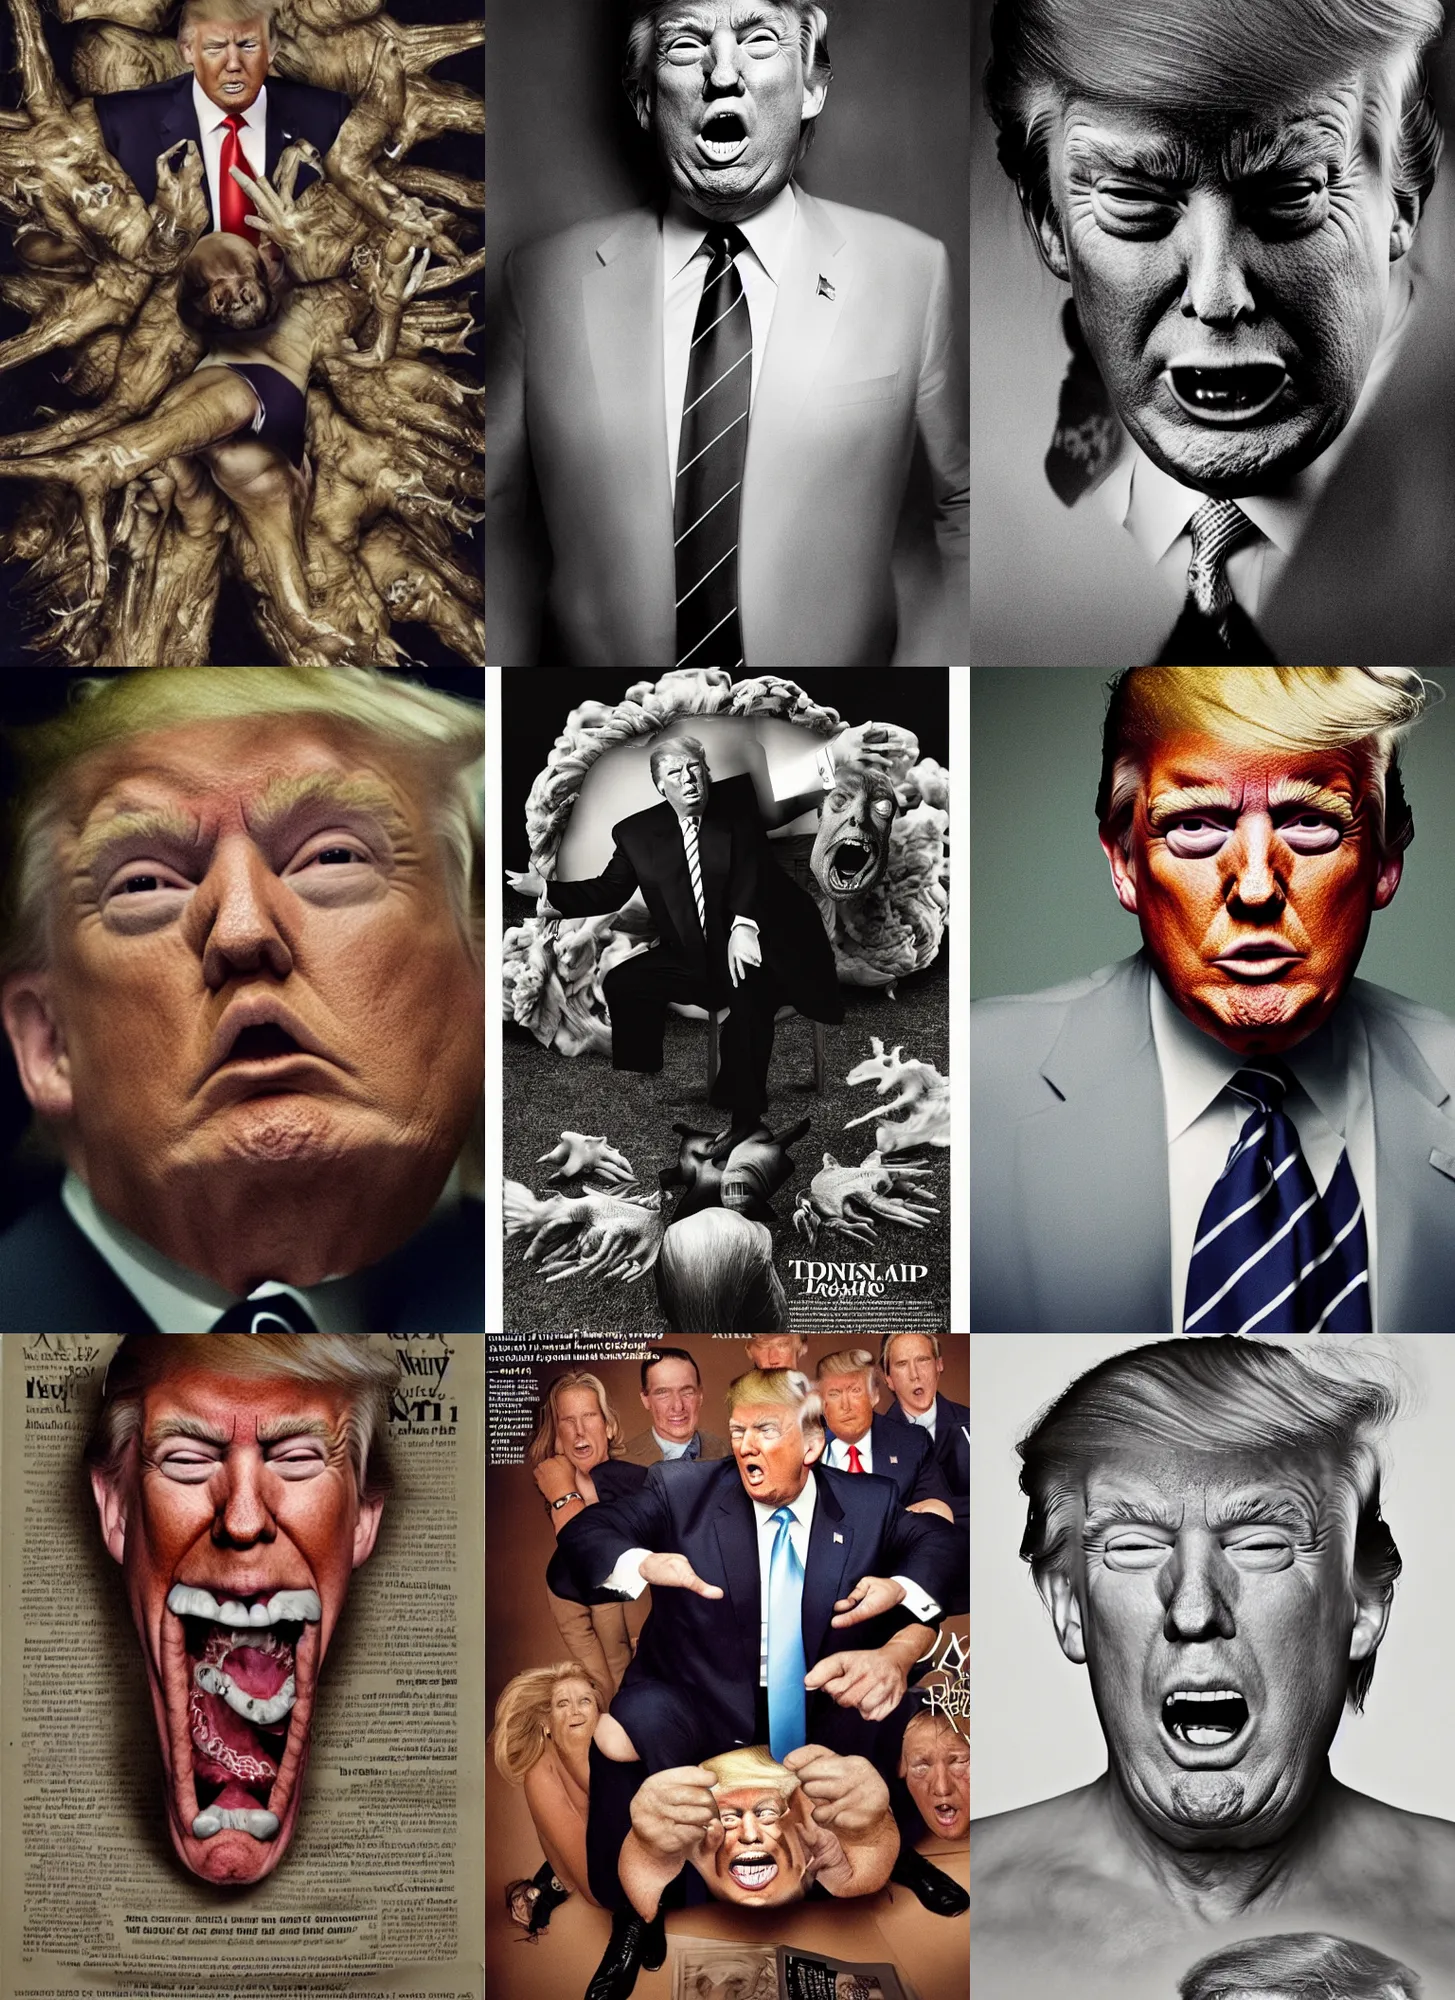 Prompt: donald trump's repulsive true form, photograph by annie leibovitz